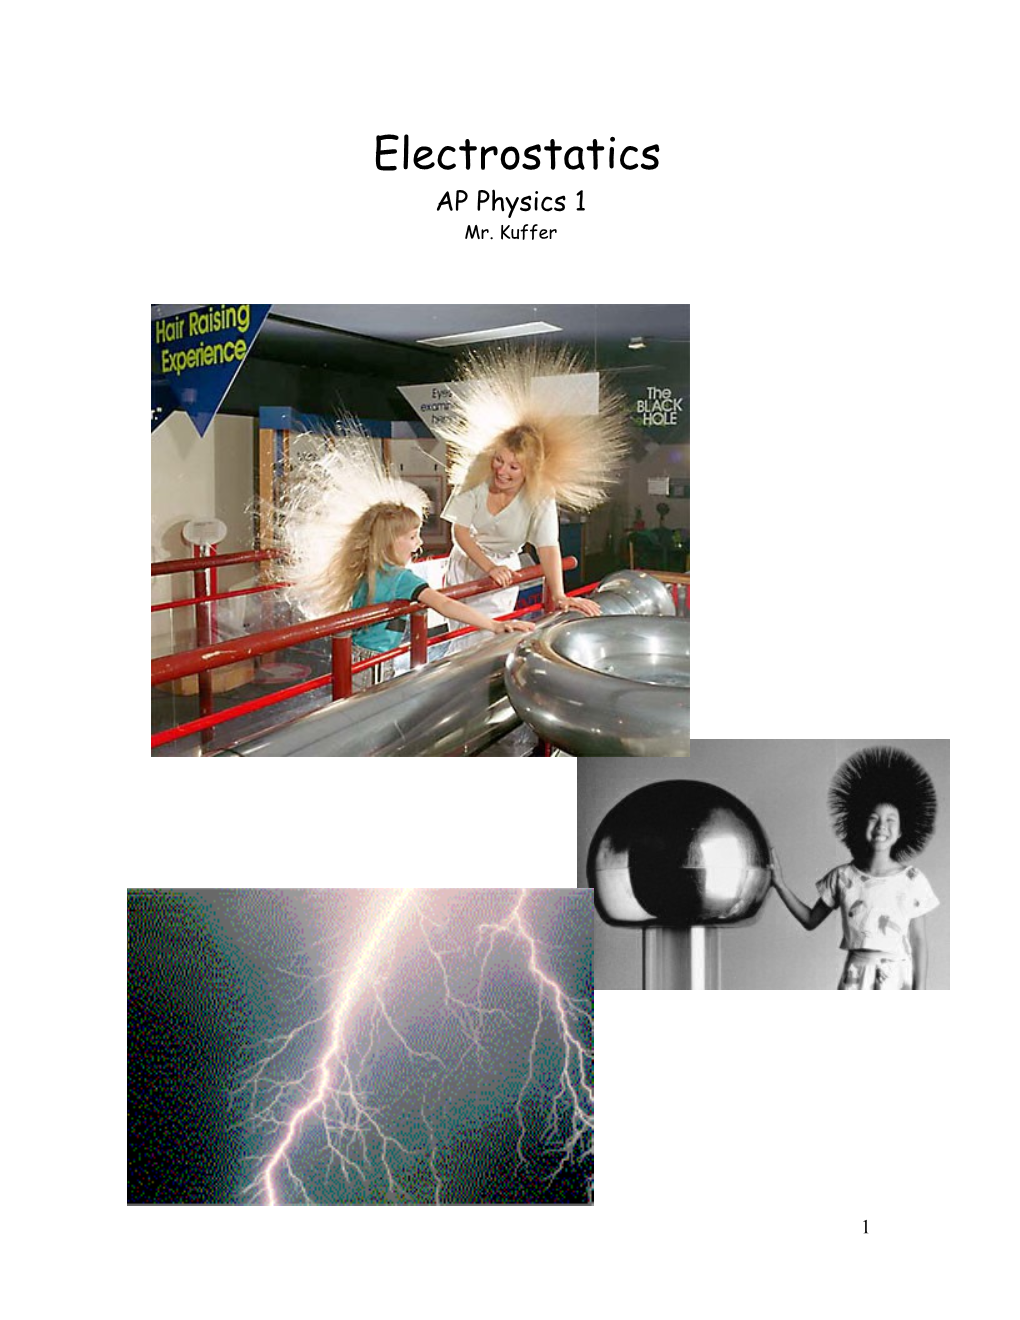 Unit 7 Electrostatics